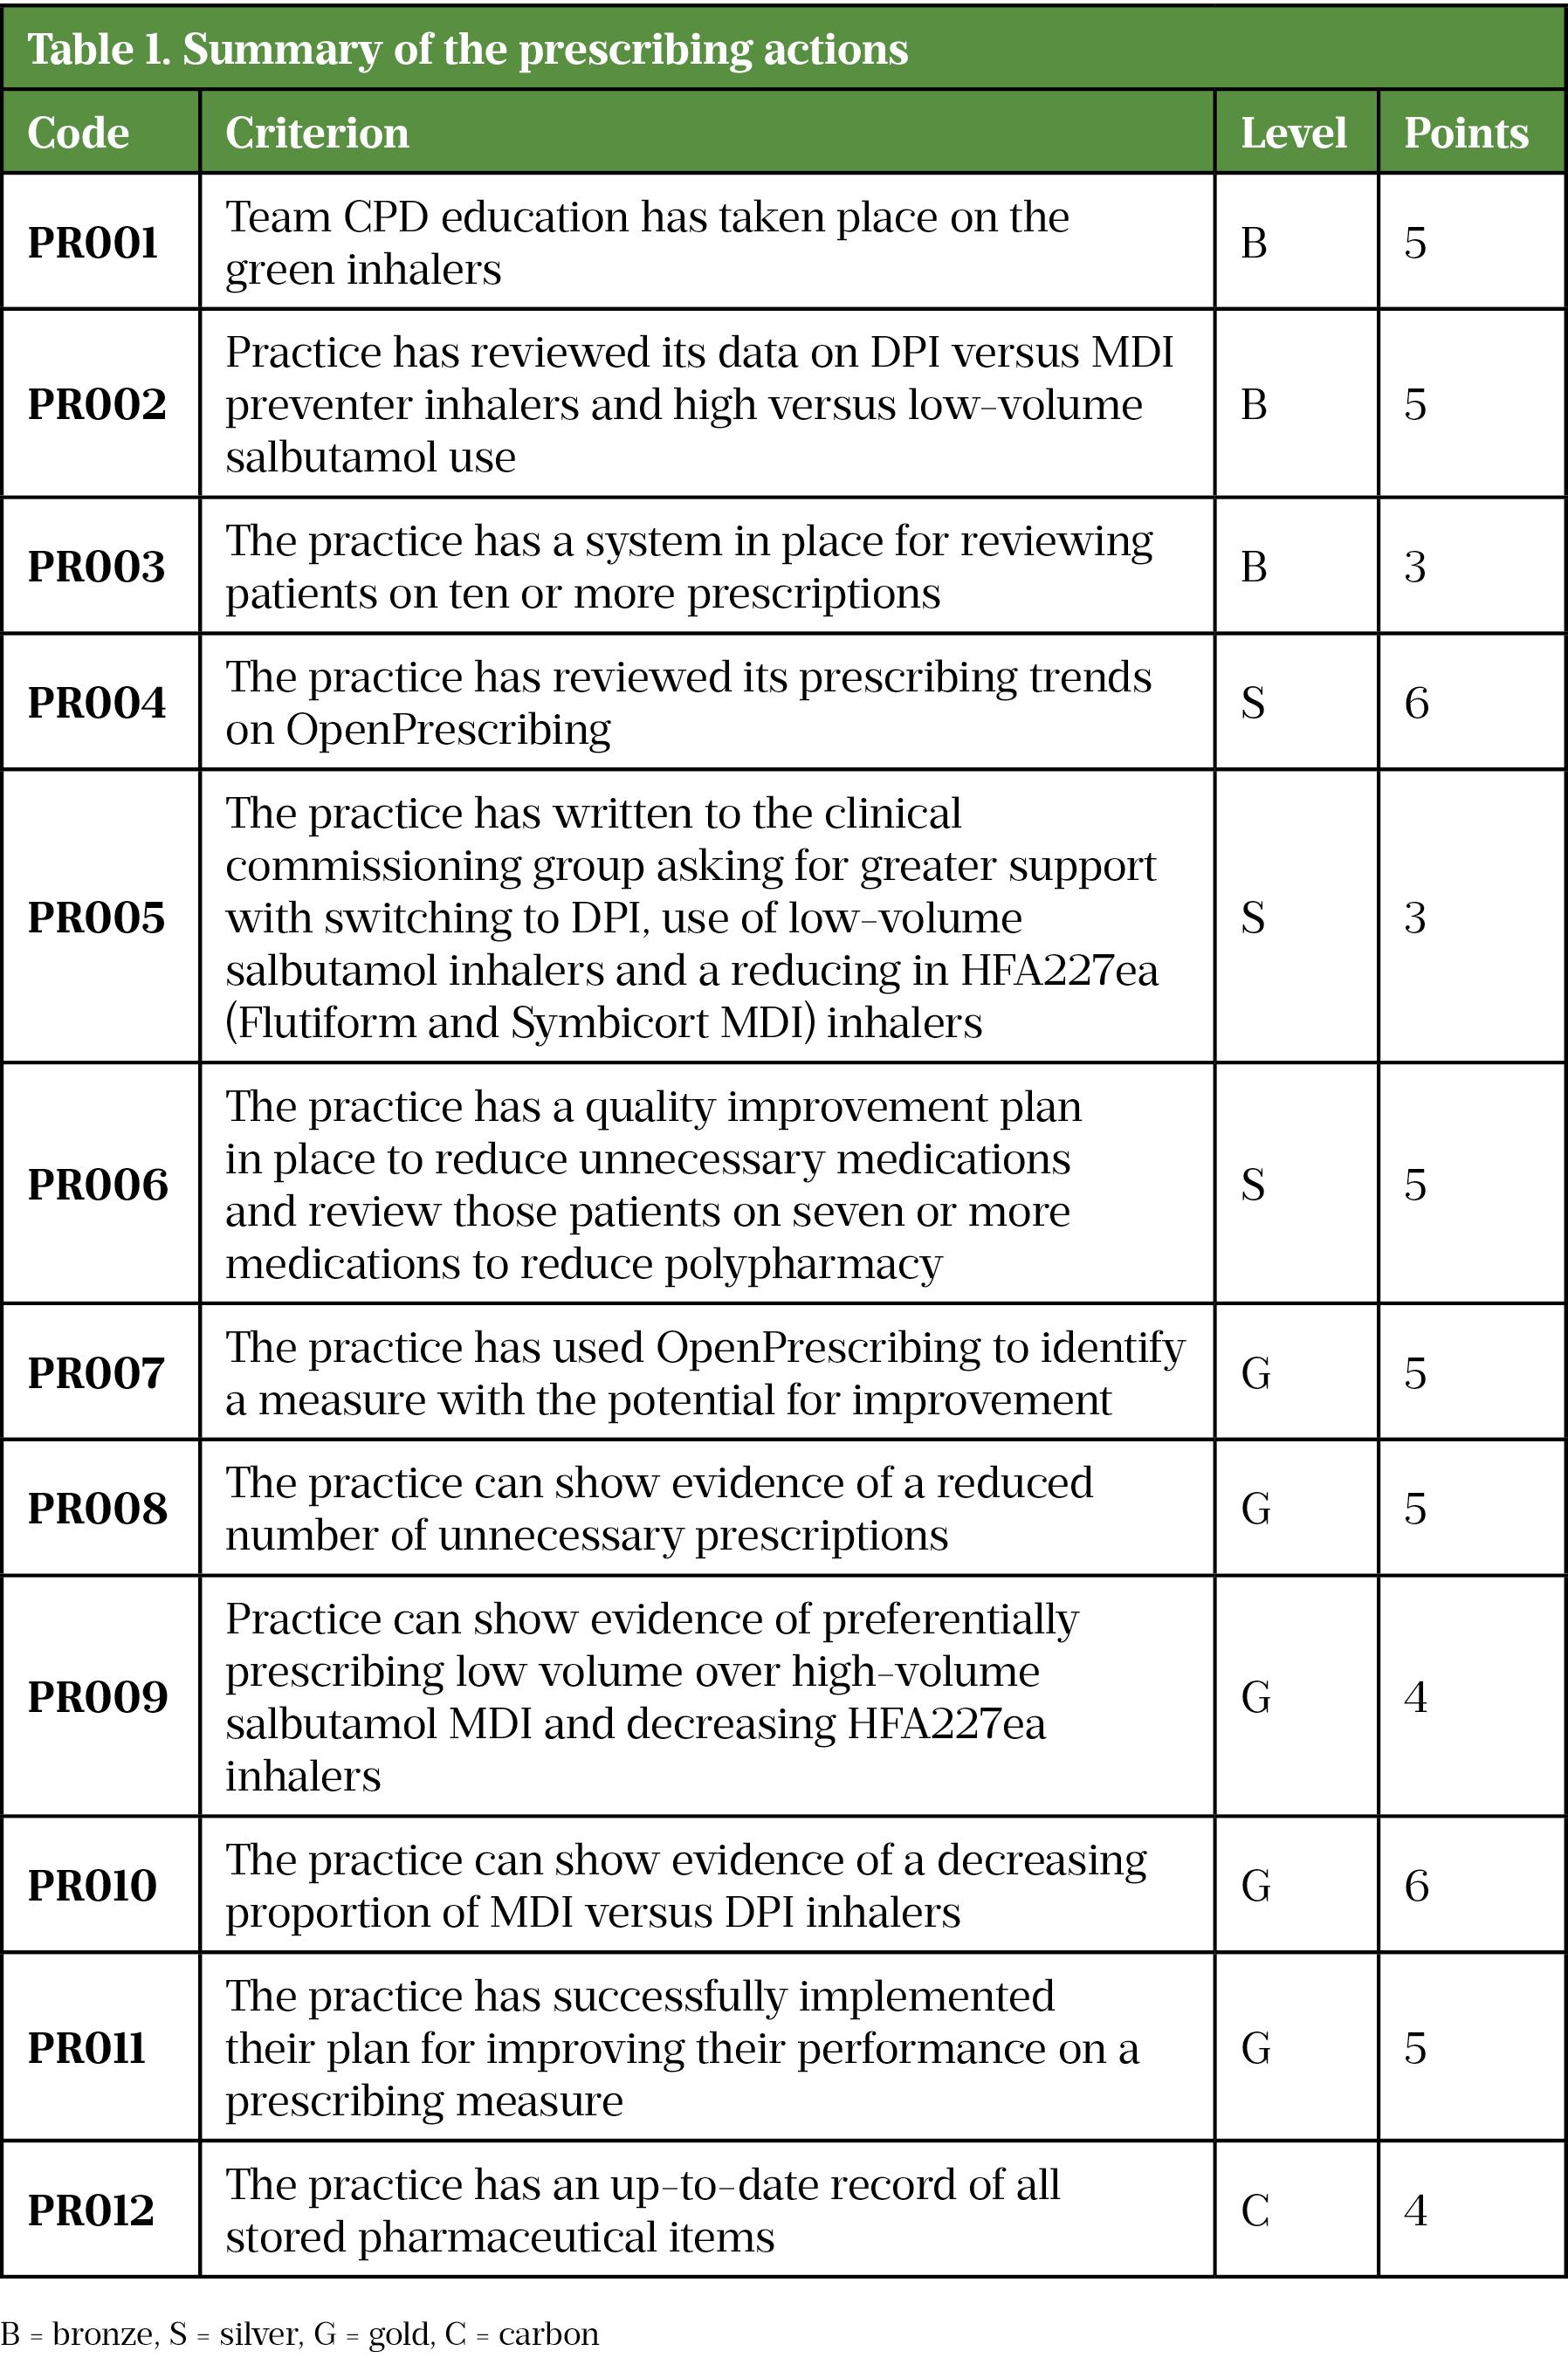 Table 1: Summary of the prescribing actions